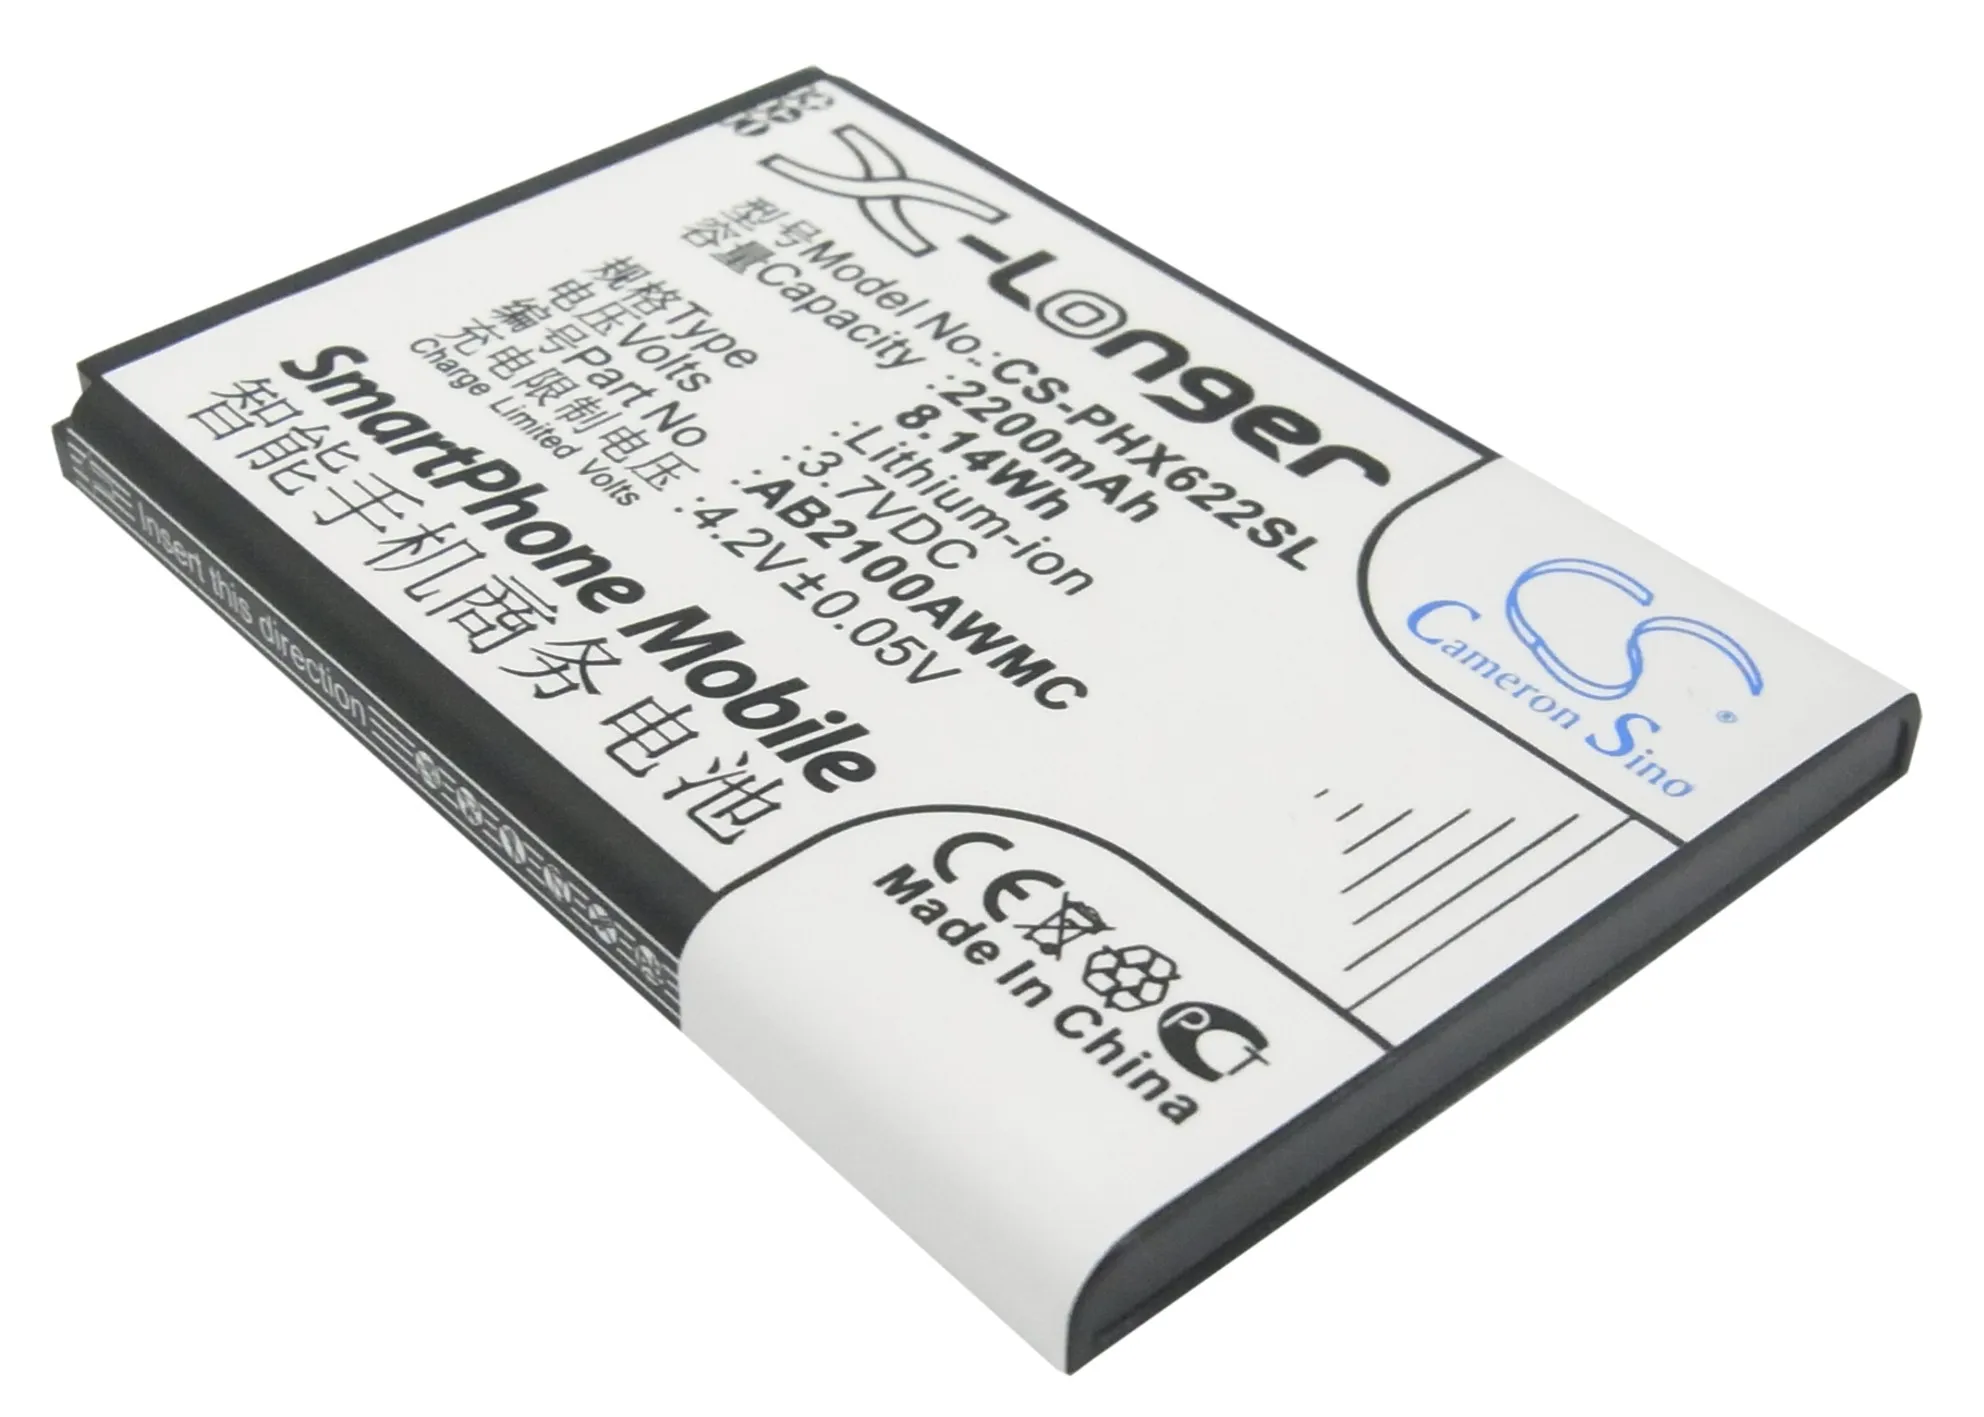 

CS 2200mAh/8.14Wh battery for Philips V726,W632,W725,W820,W8568,X622,Xenium CTX710,Xenium V726,Xenium W632, W725